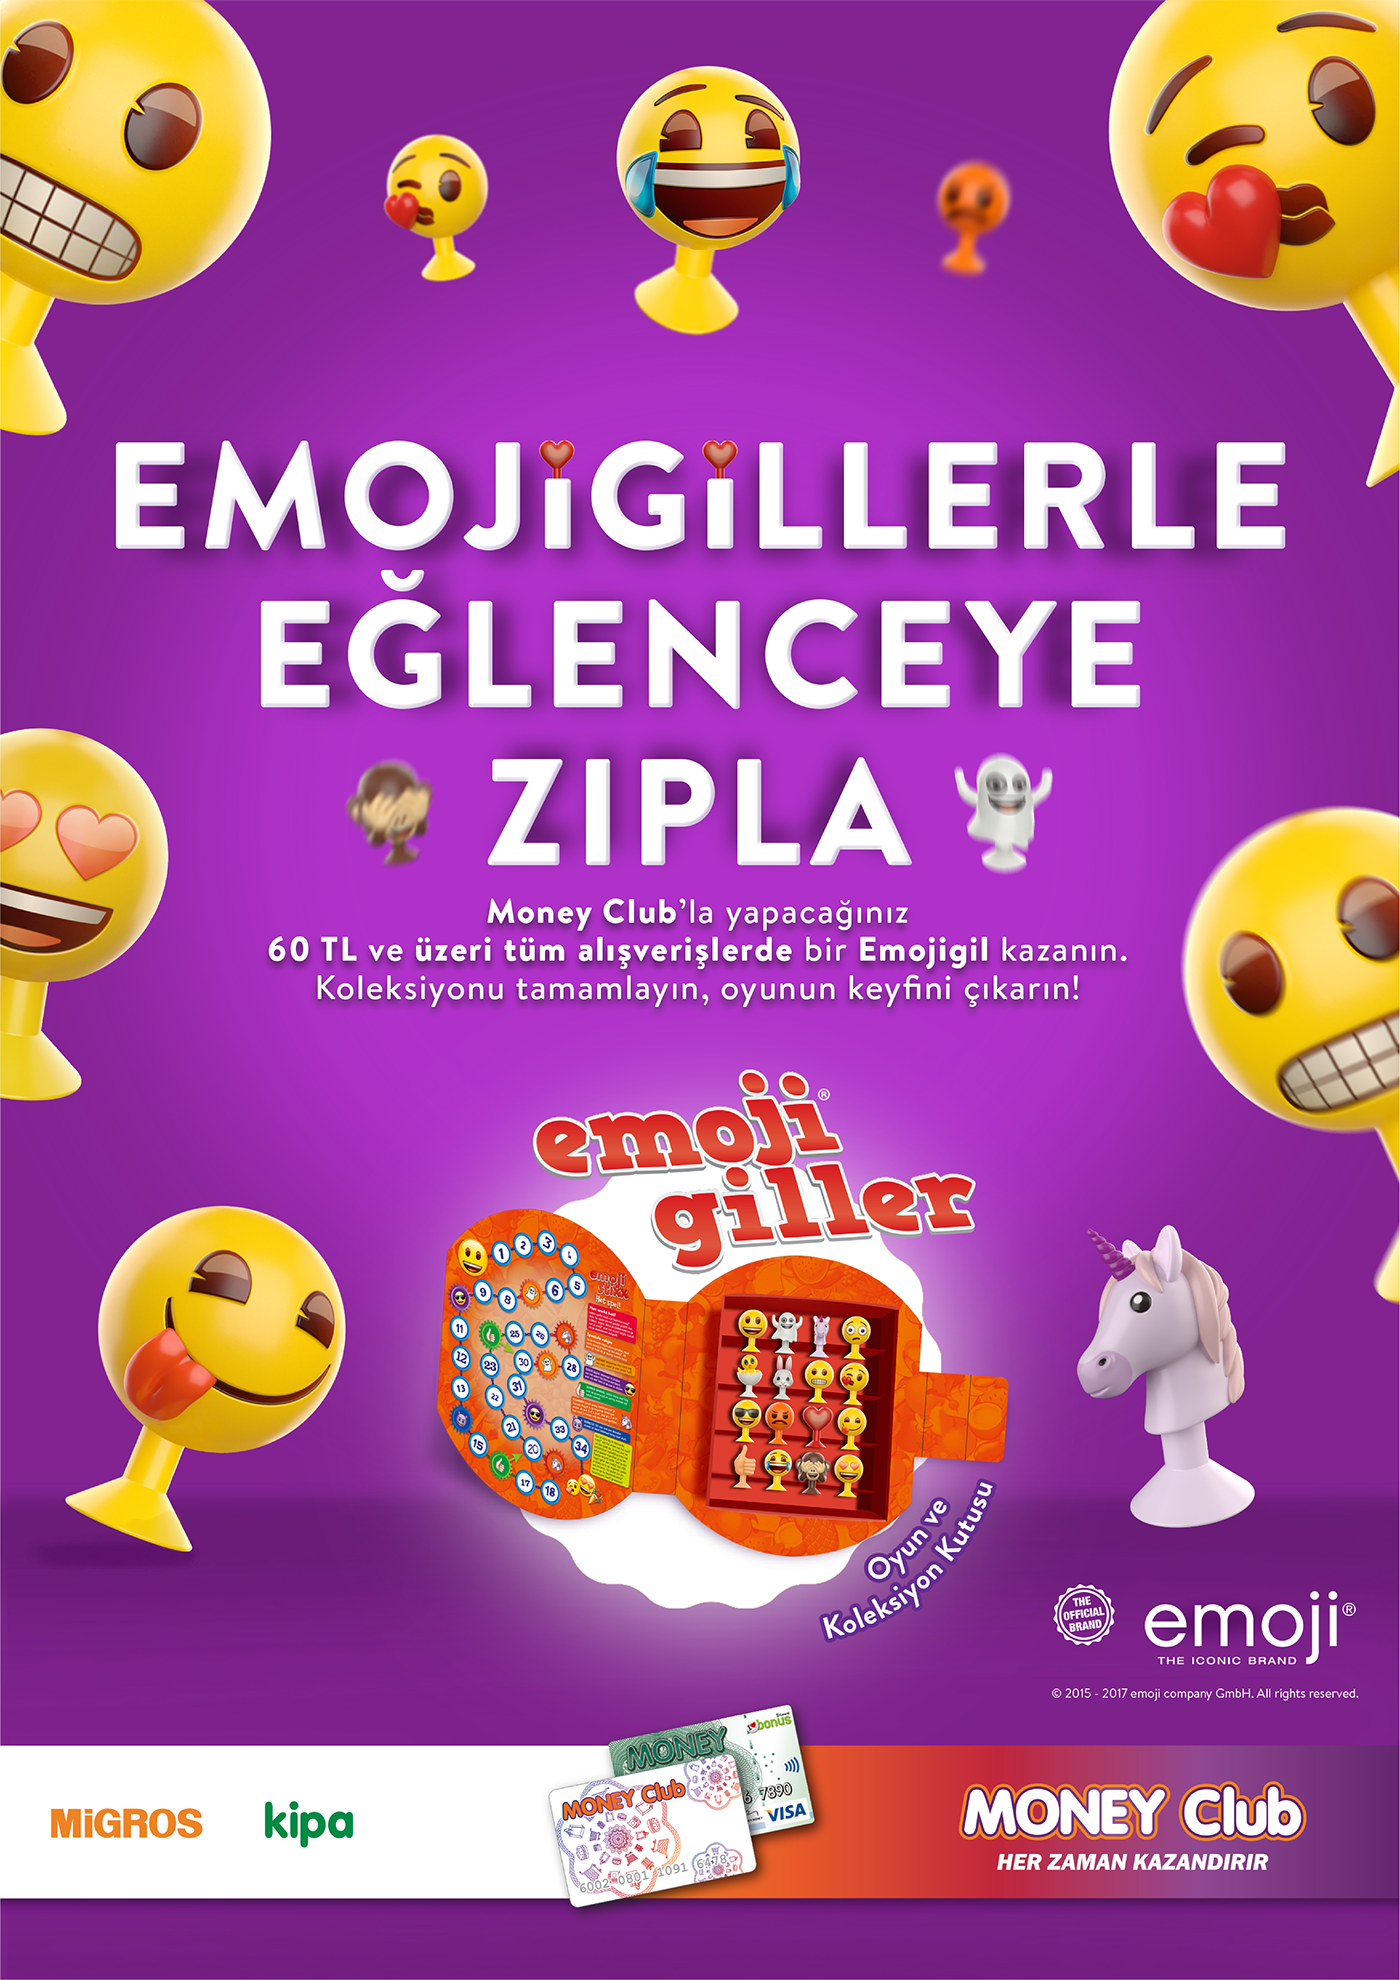 Emoji emojigiller MONEYCLUB serdesin ads commercial Migros reklam